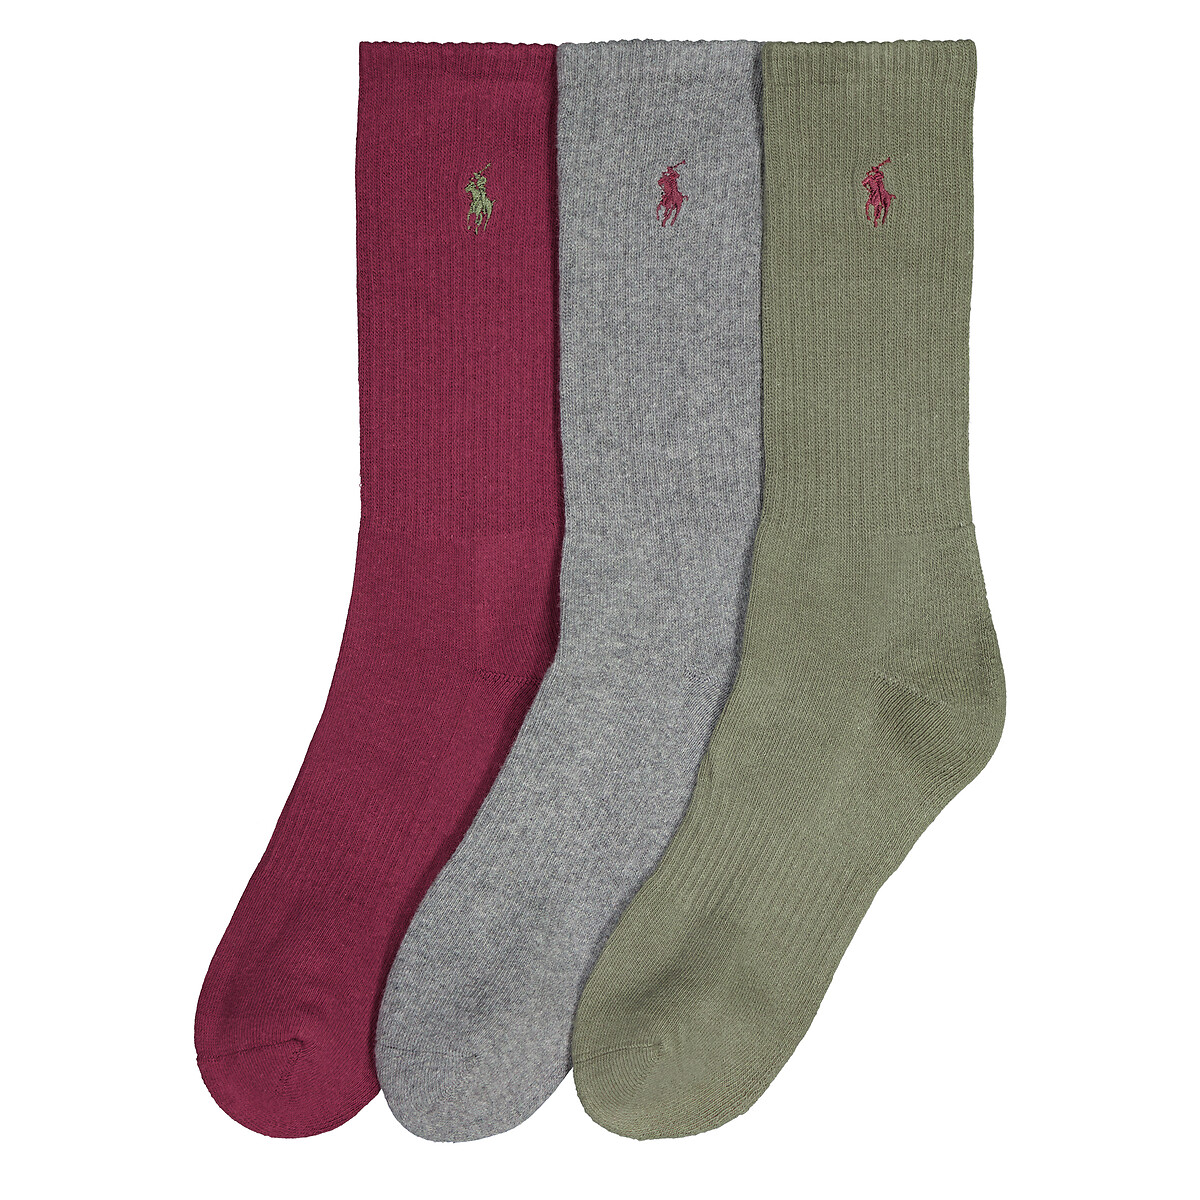 Dato Polvo Fructífero Lote de 3 calcetines rojo + verde + gris Polo Ralph Lauren | La Redoute